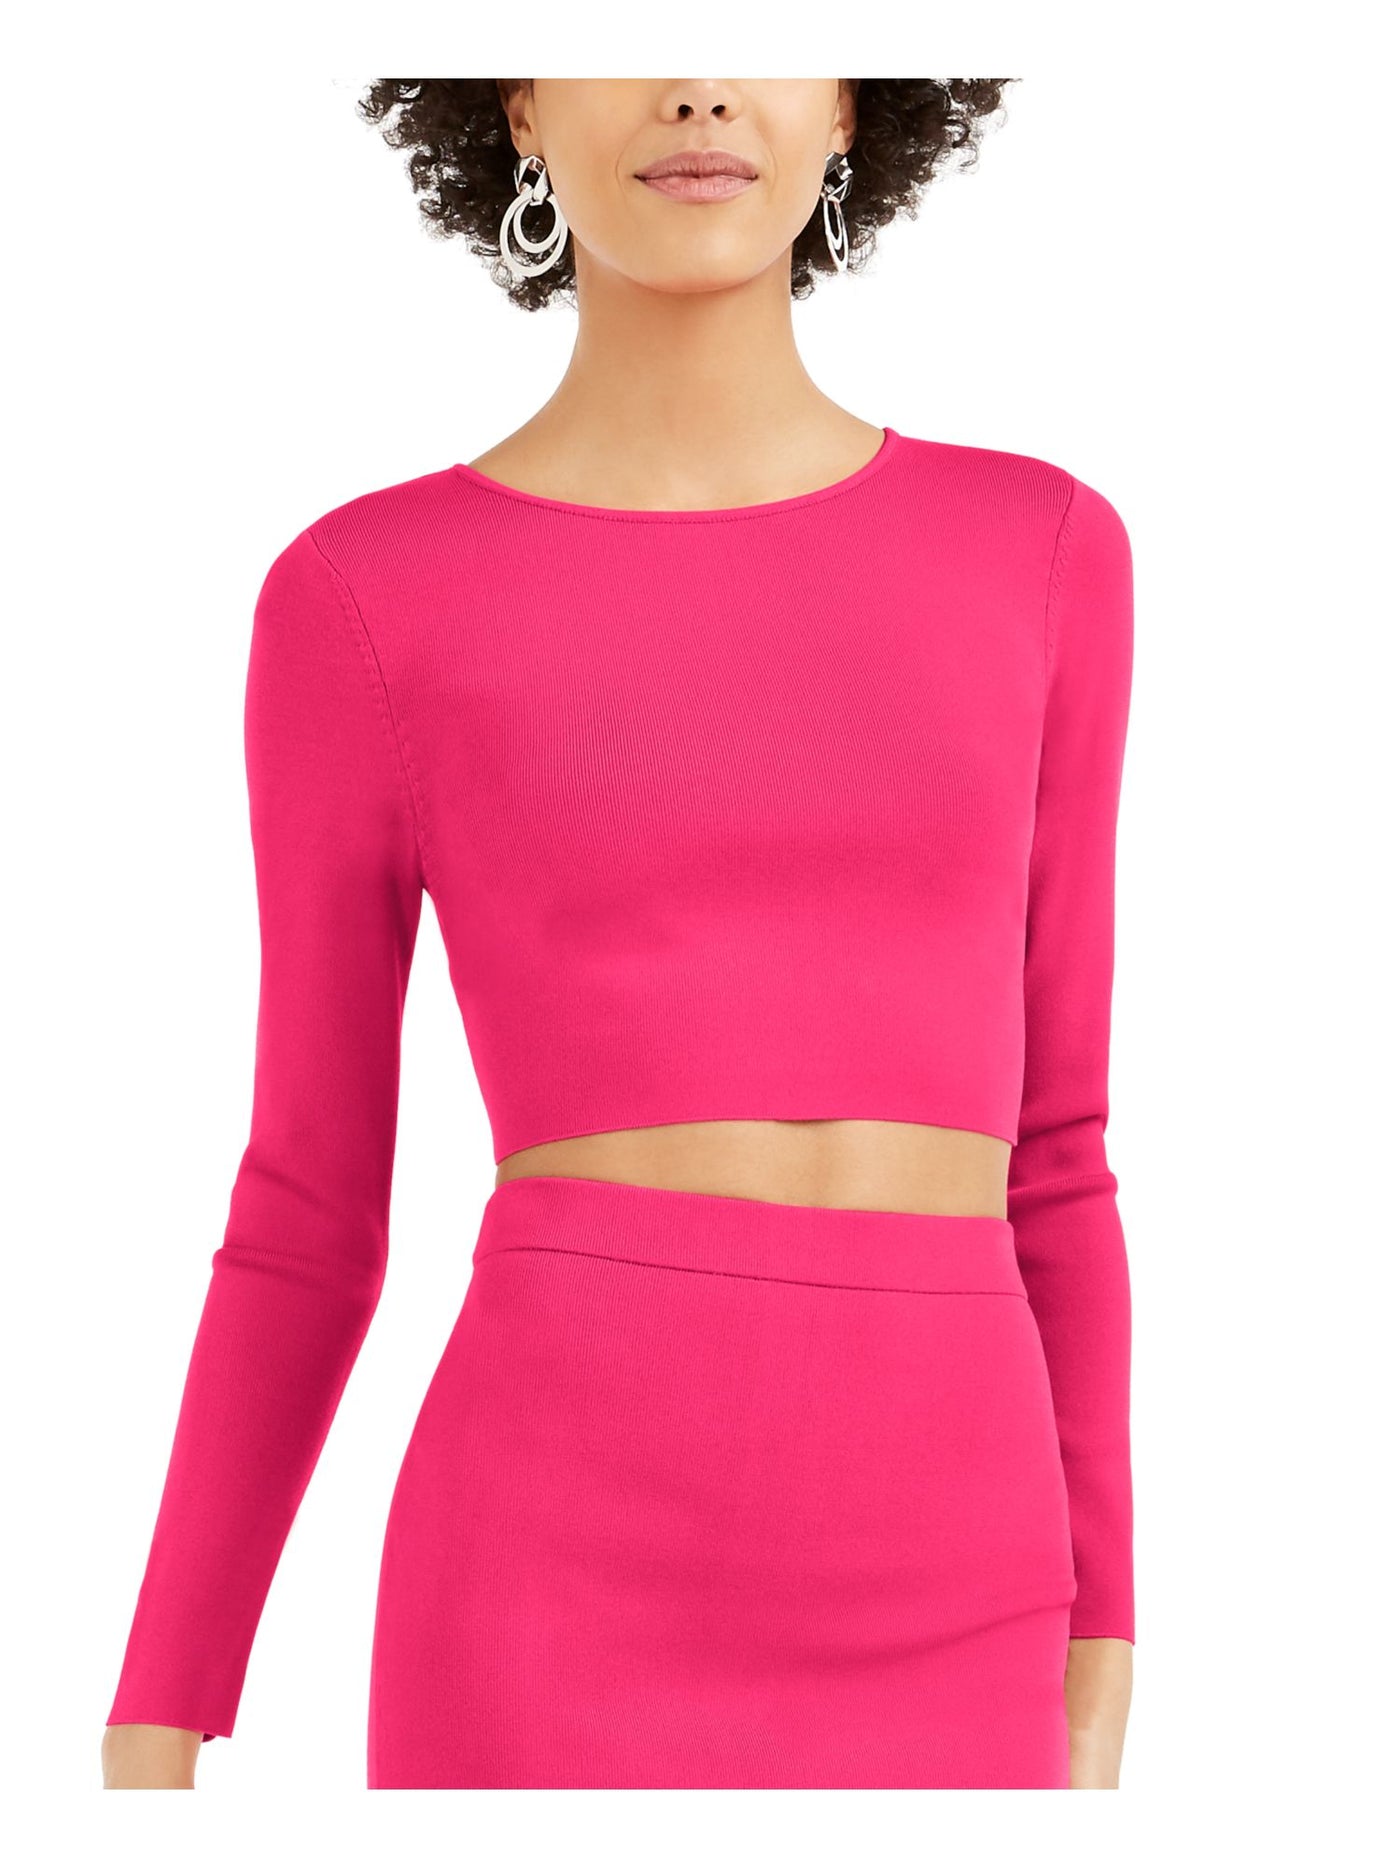 BAR III Womens Pink Long Sleeve Crew Neck Crop Top Sweater L